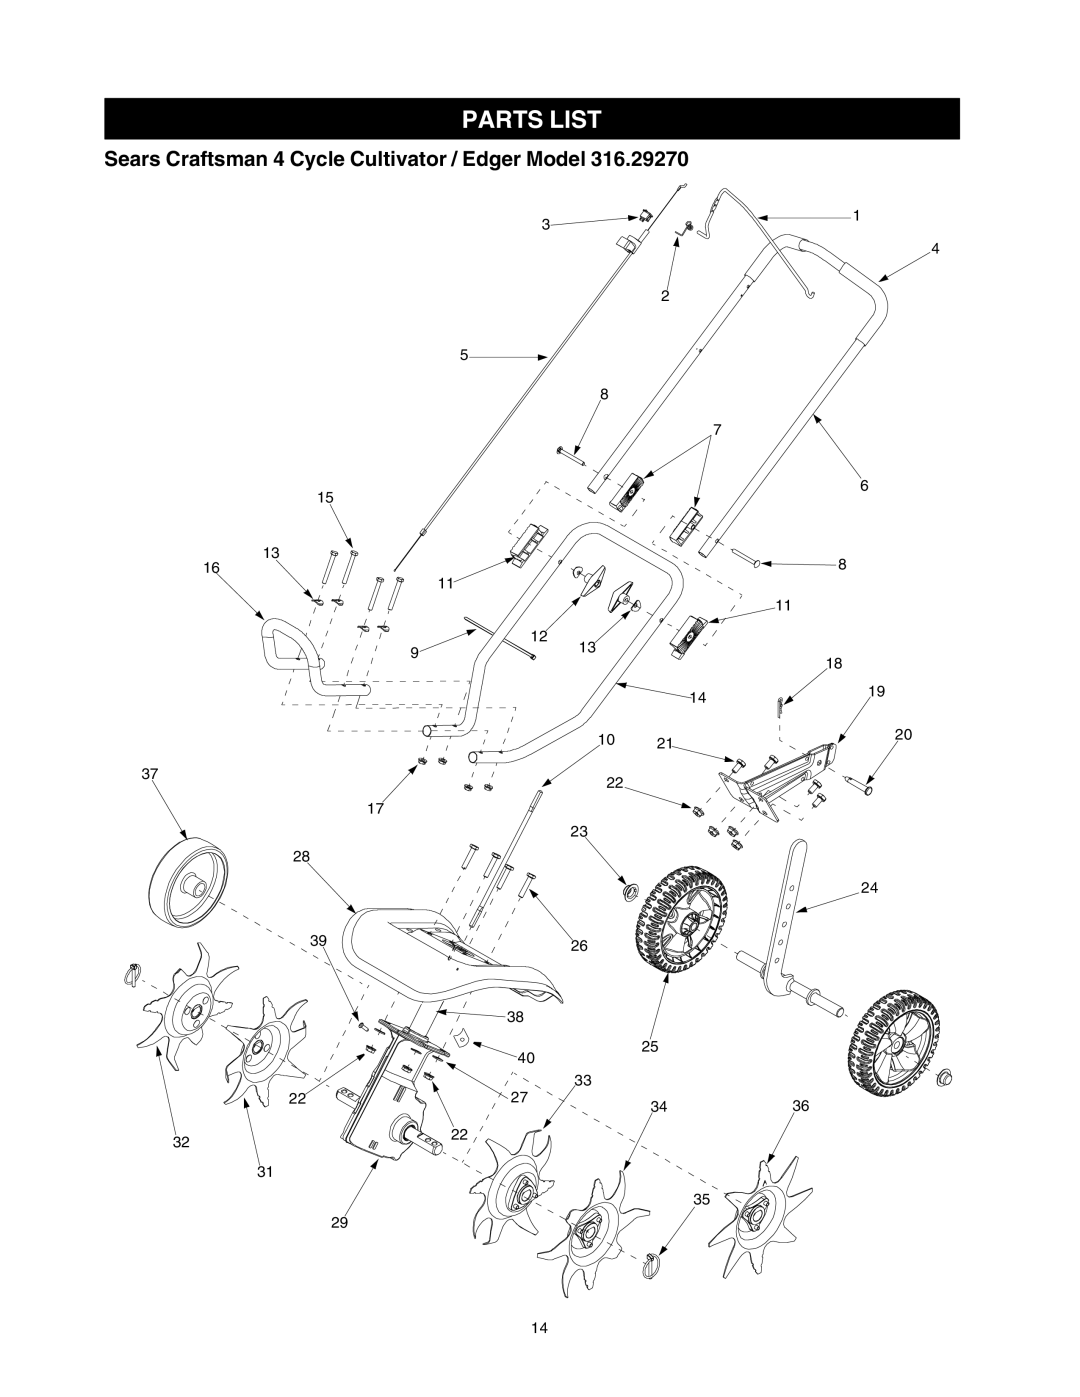 Sears 316.2927 manual Parts List 